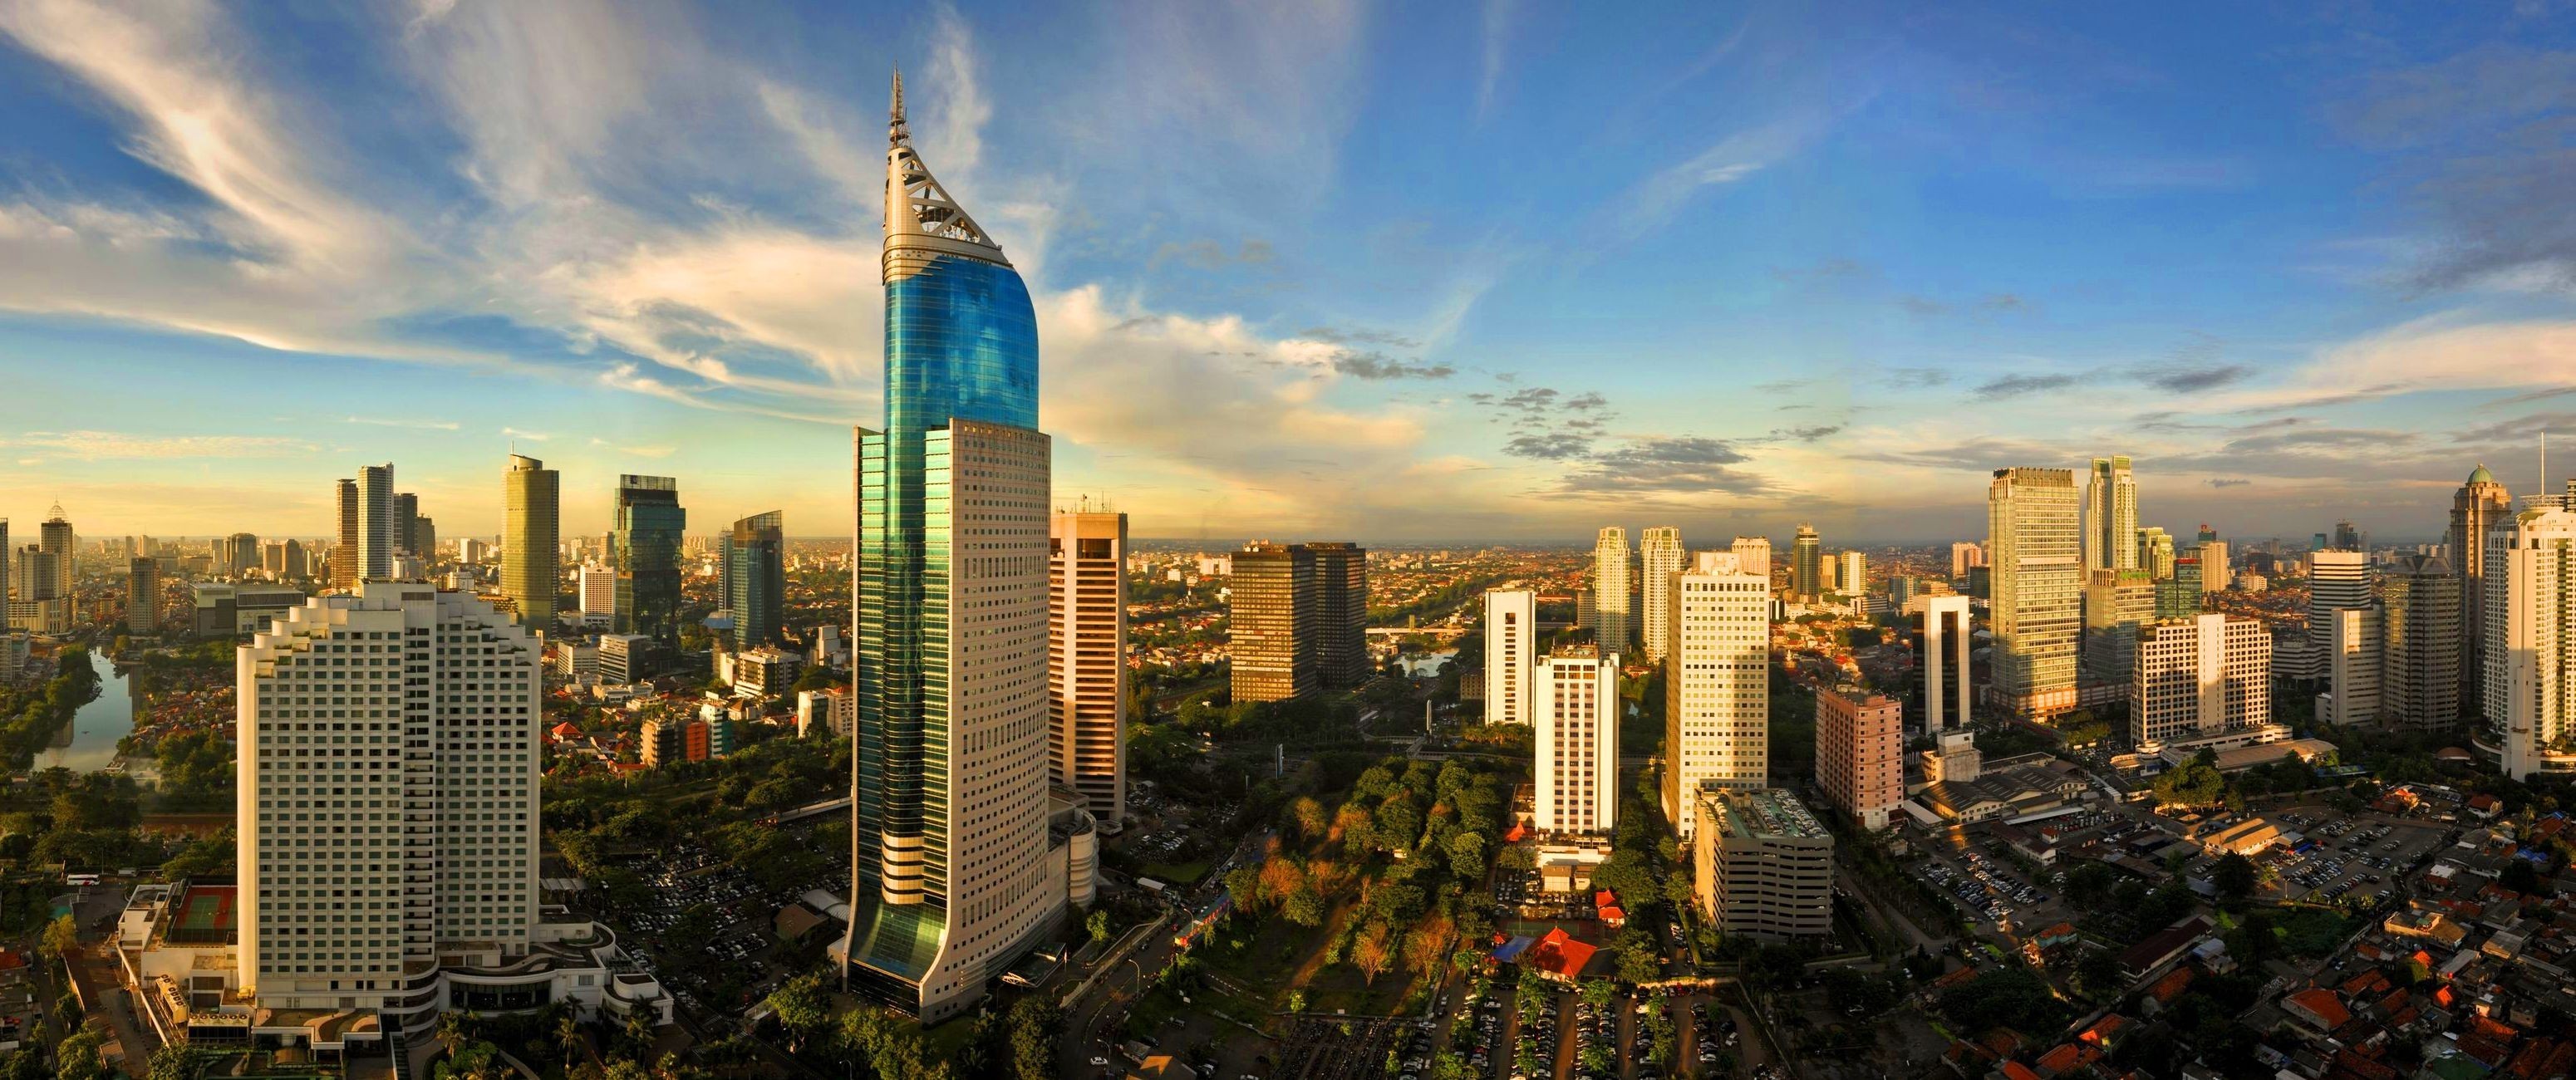 Cityscapes Indonesia Cities Skyline Jakarta Wallpaper - HD Wallpaper 